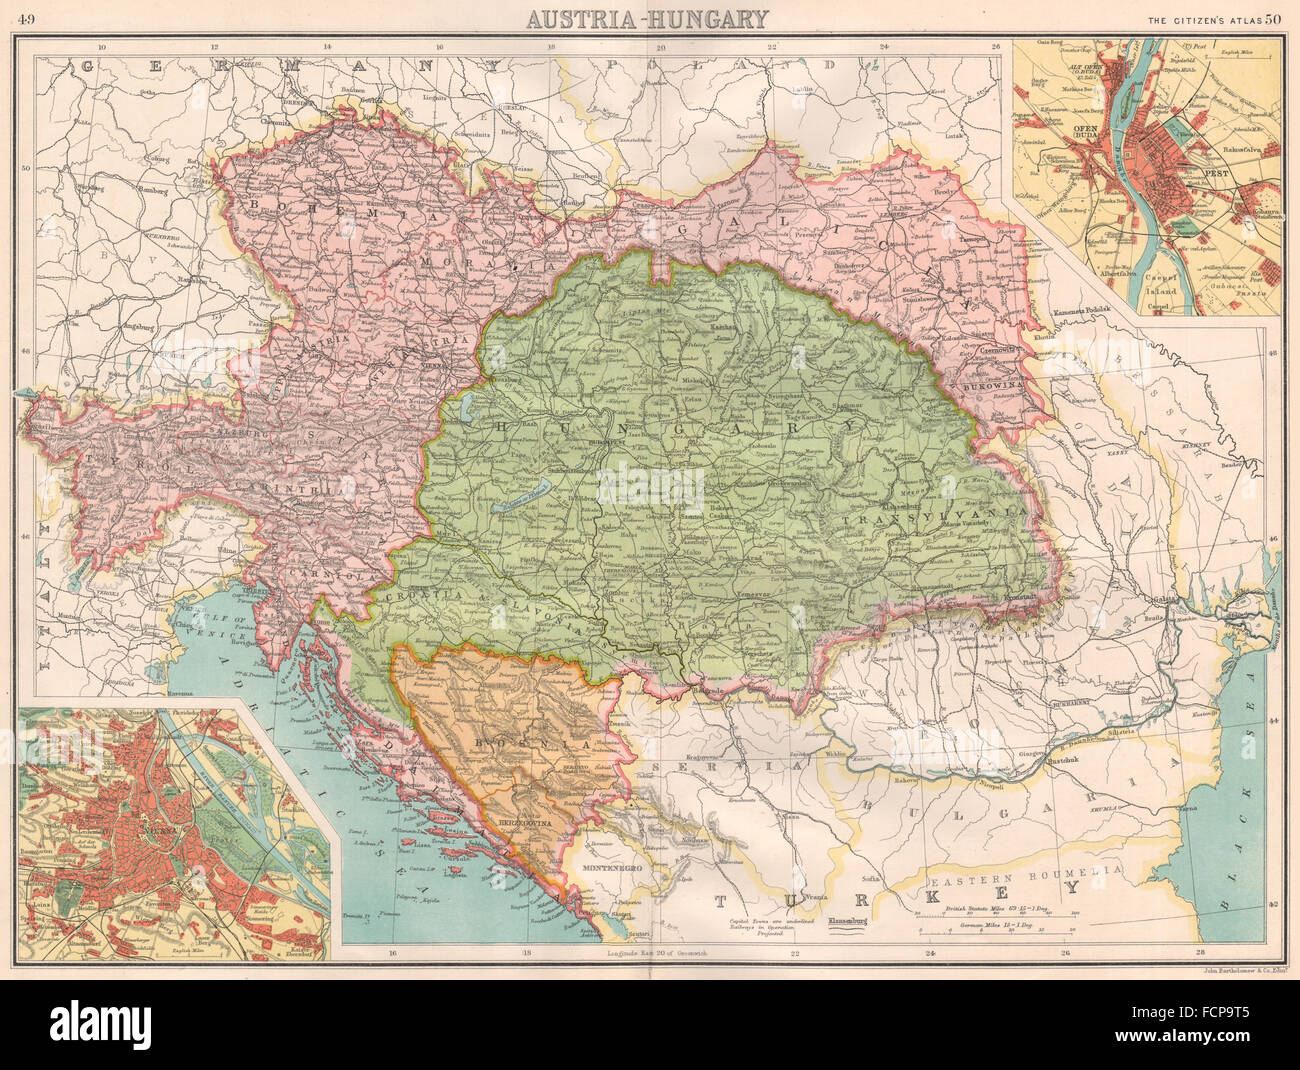 AUSTRIA-HUNGARY:Bosnia Galicia Bohemia.Vienna;Offen(Buda).BARTHOLOMEW, 1898 map Stock Photo